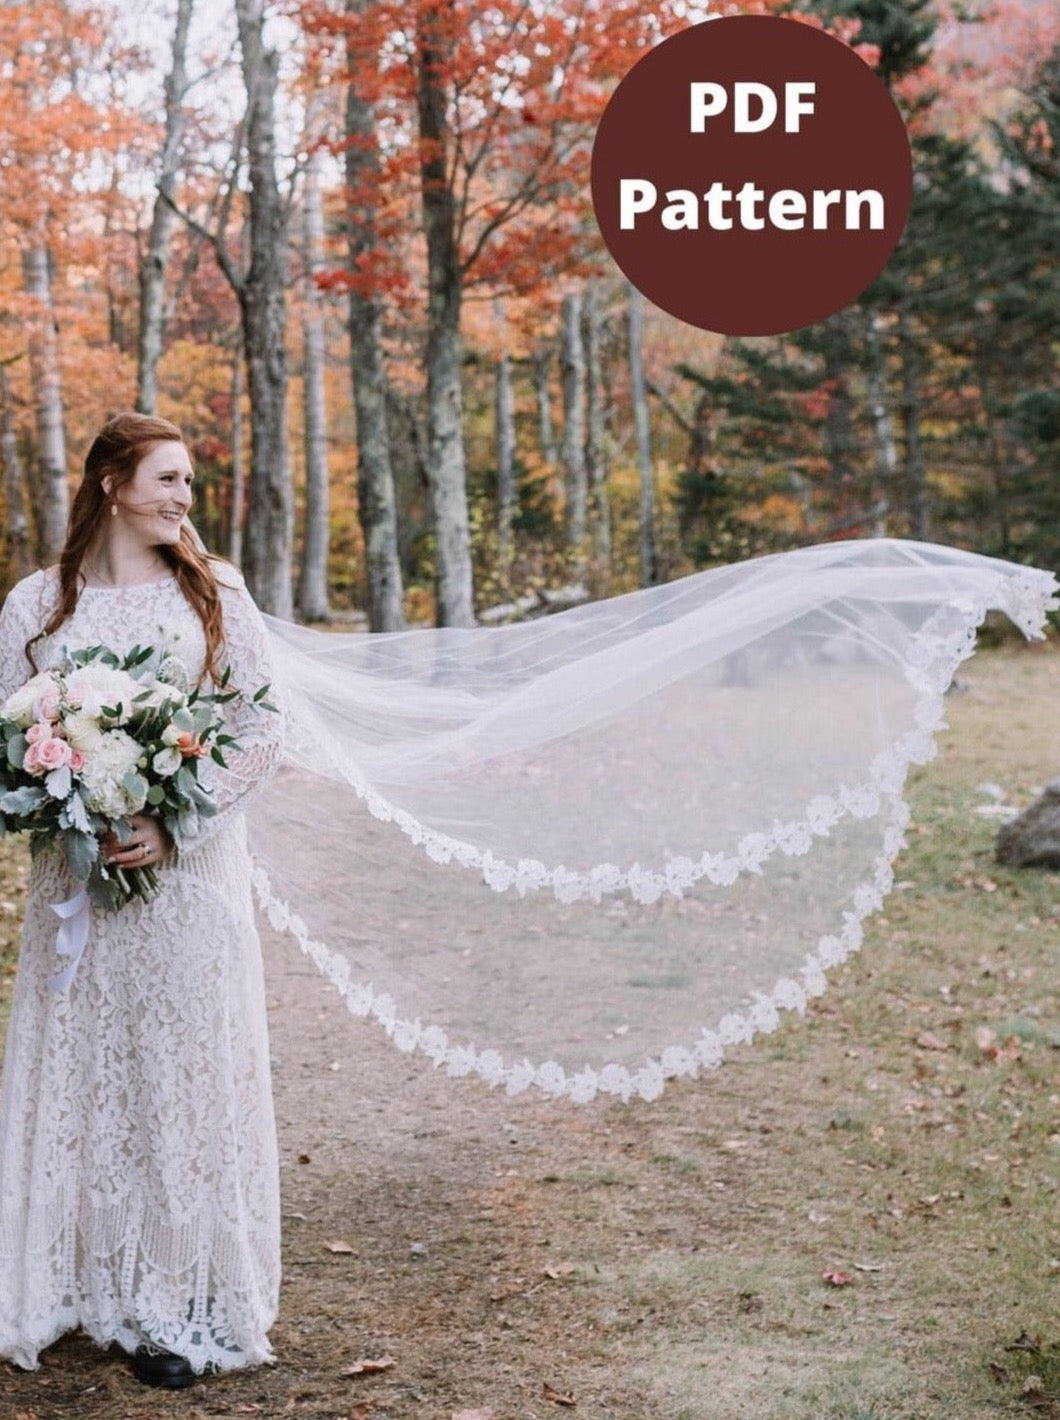 venice lace long wedding veil for outdoor wedding